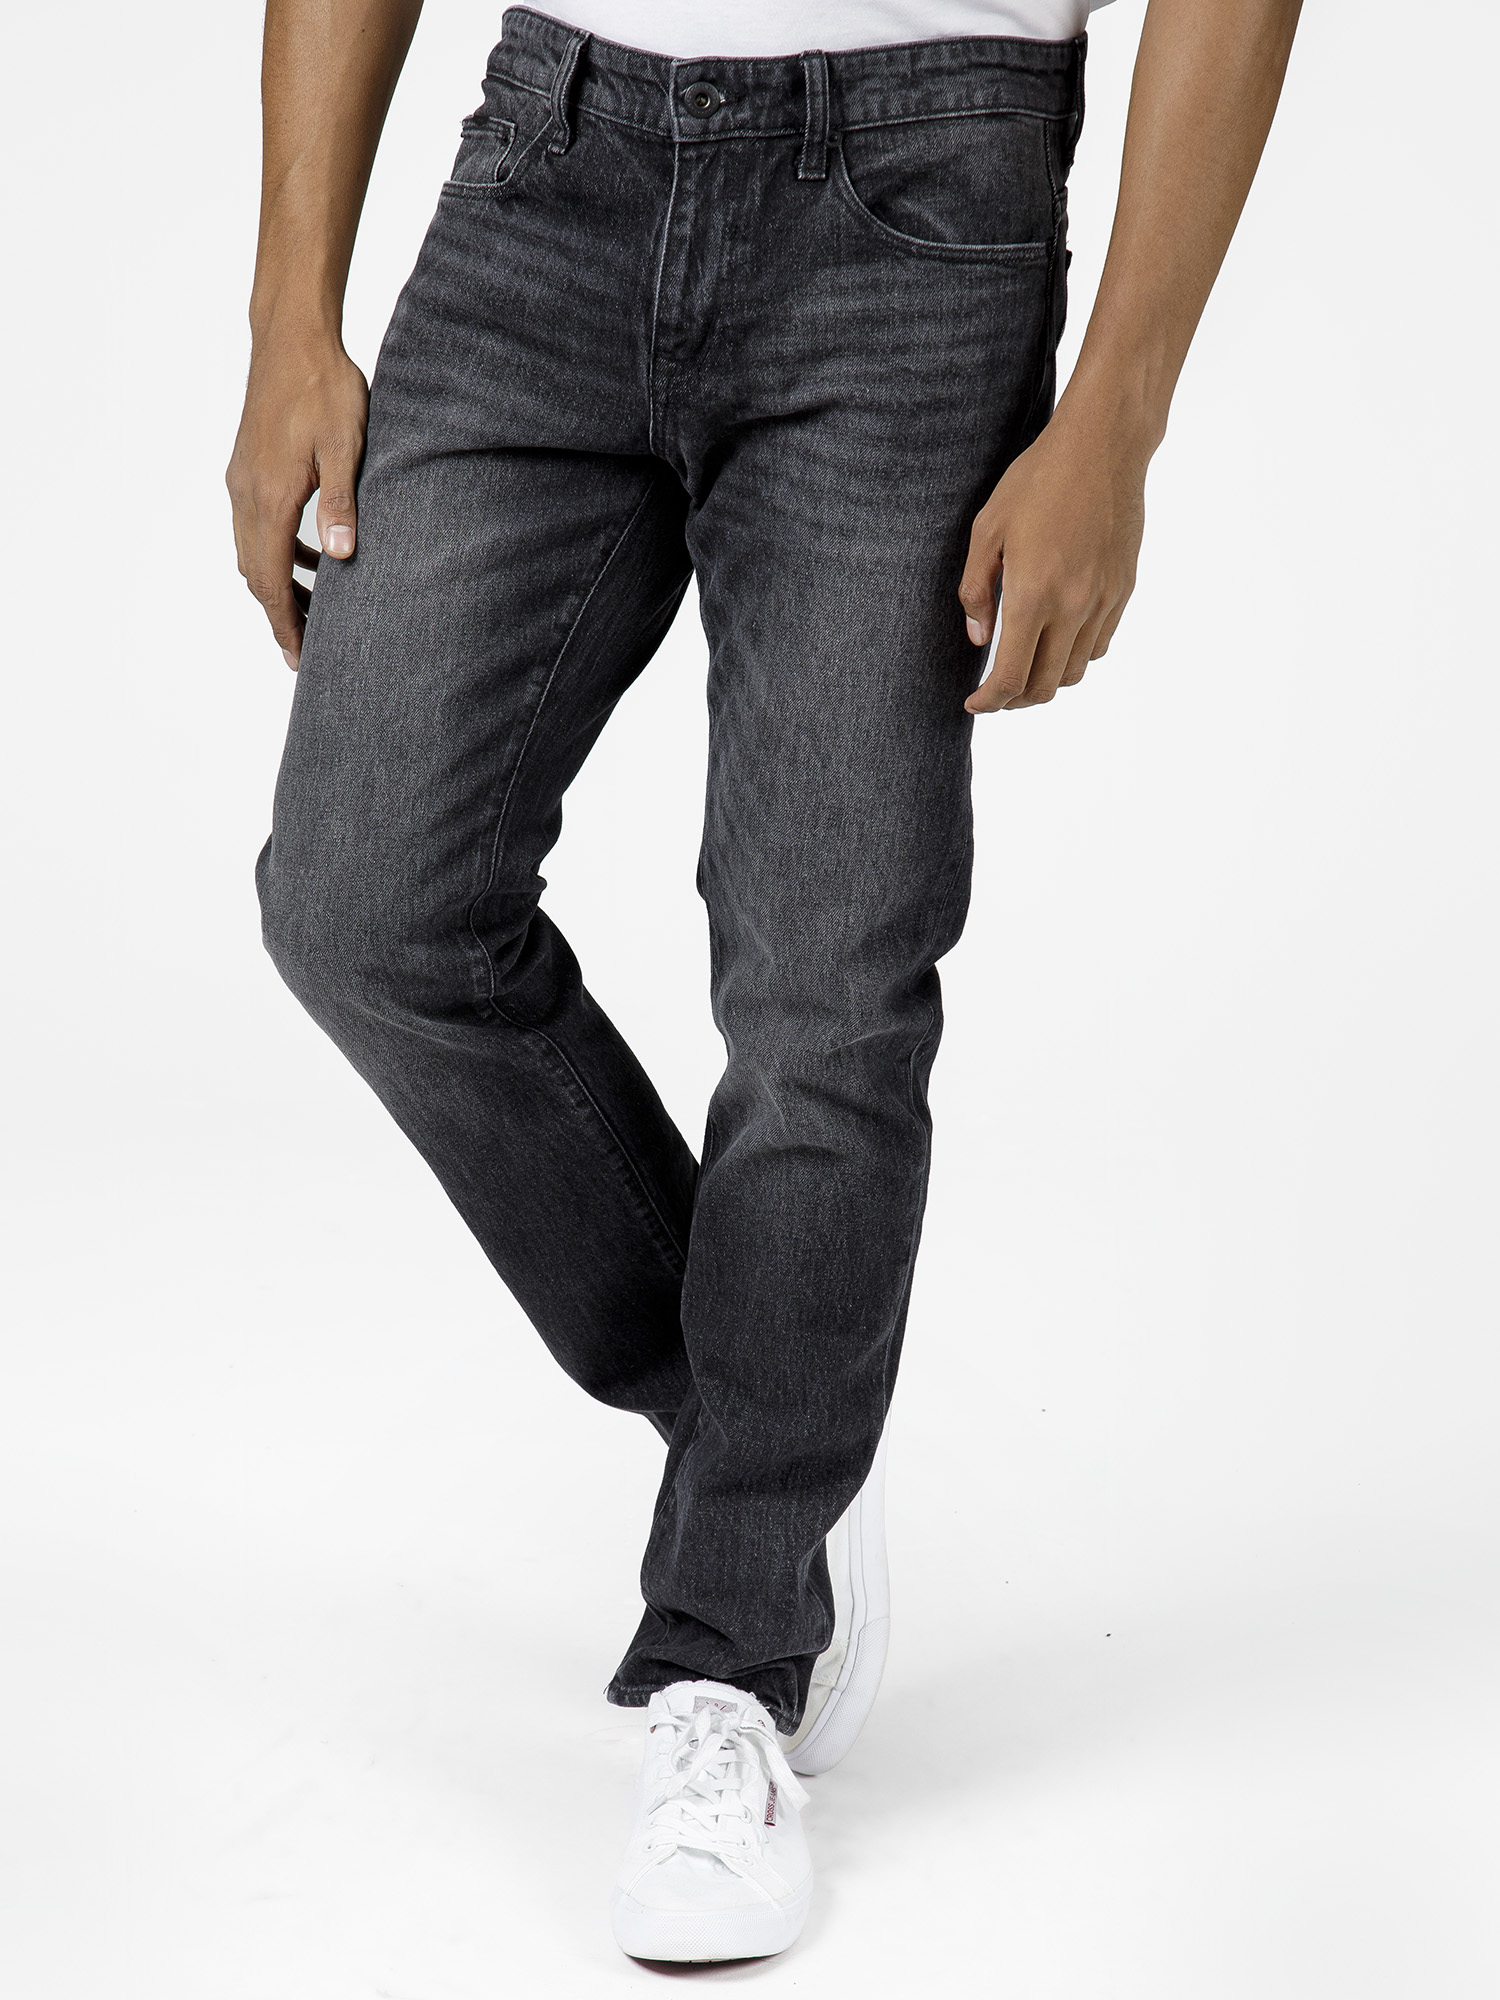 Джинсы Cross Jeans для мужчин, F 152-110, размер 32-32, чёрные